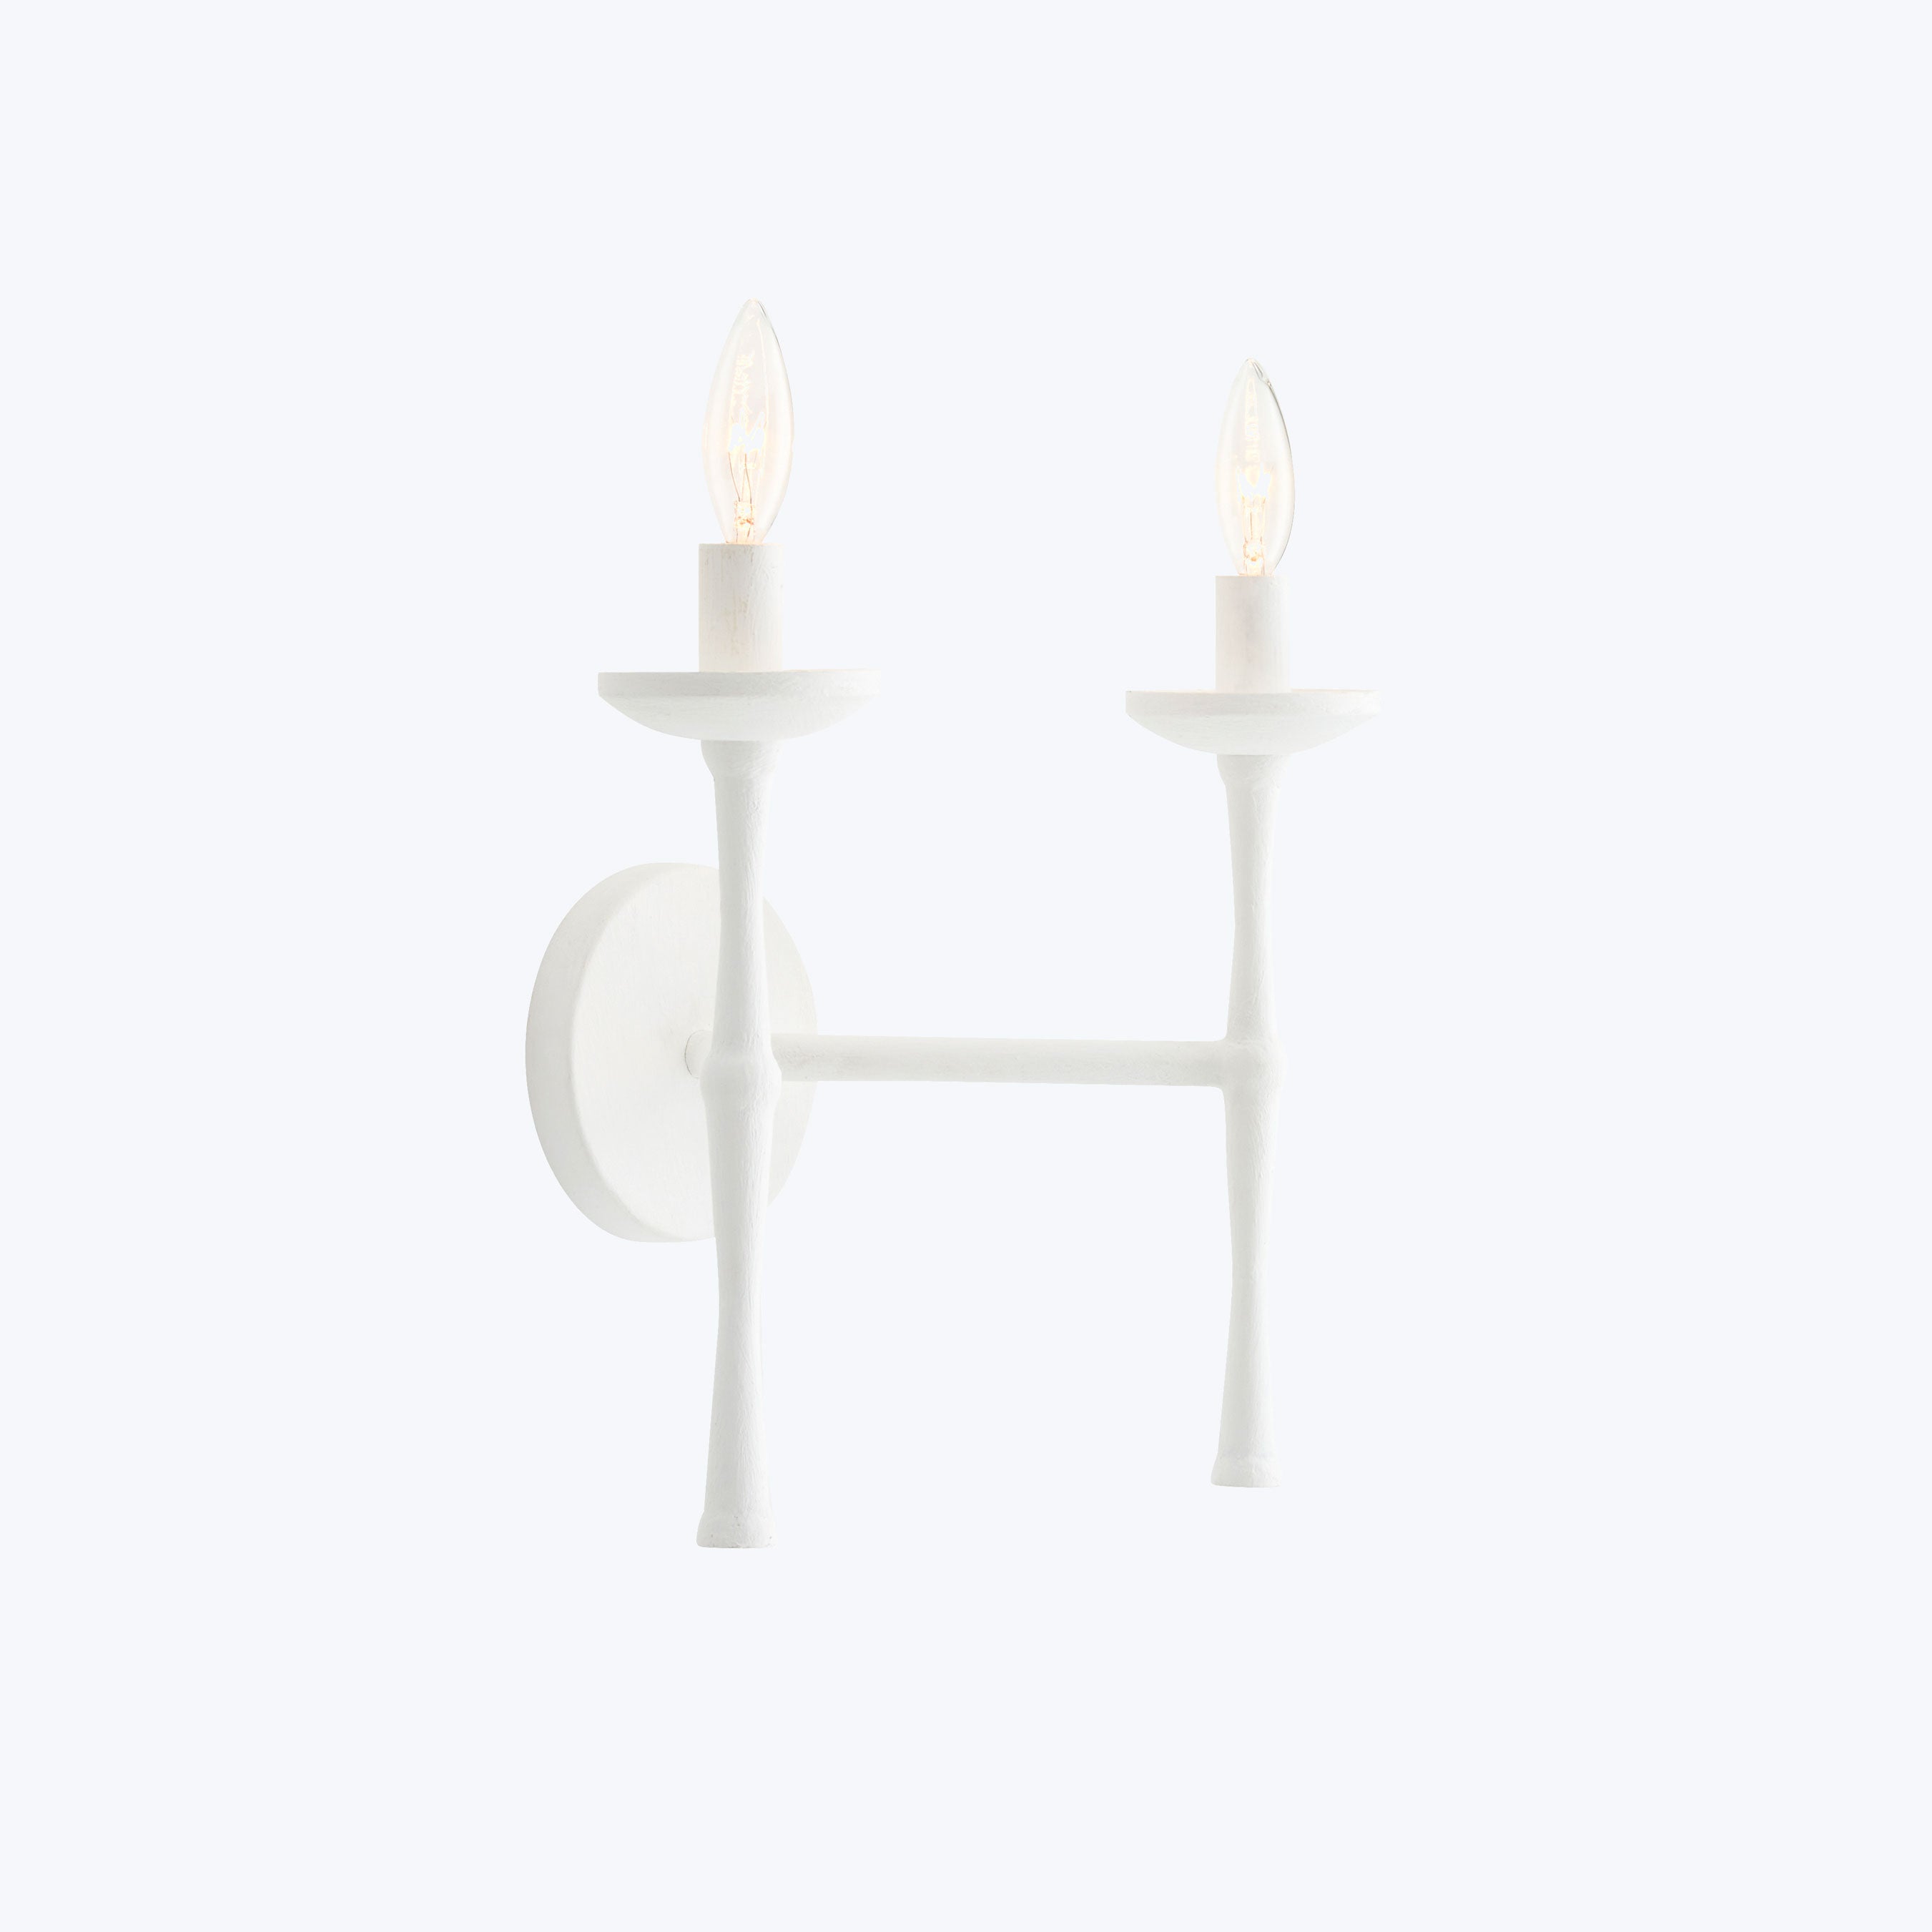 Elegant, minimalist light fixture with elongated flame-shaped bulbs on white wall.